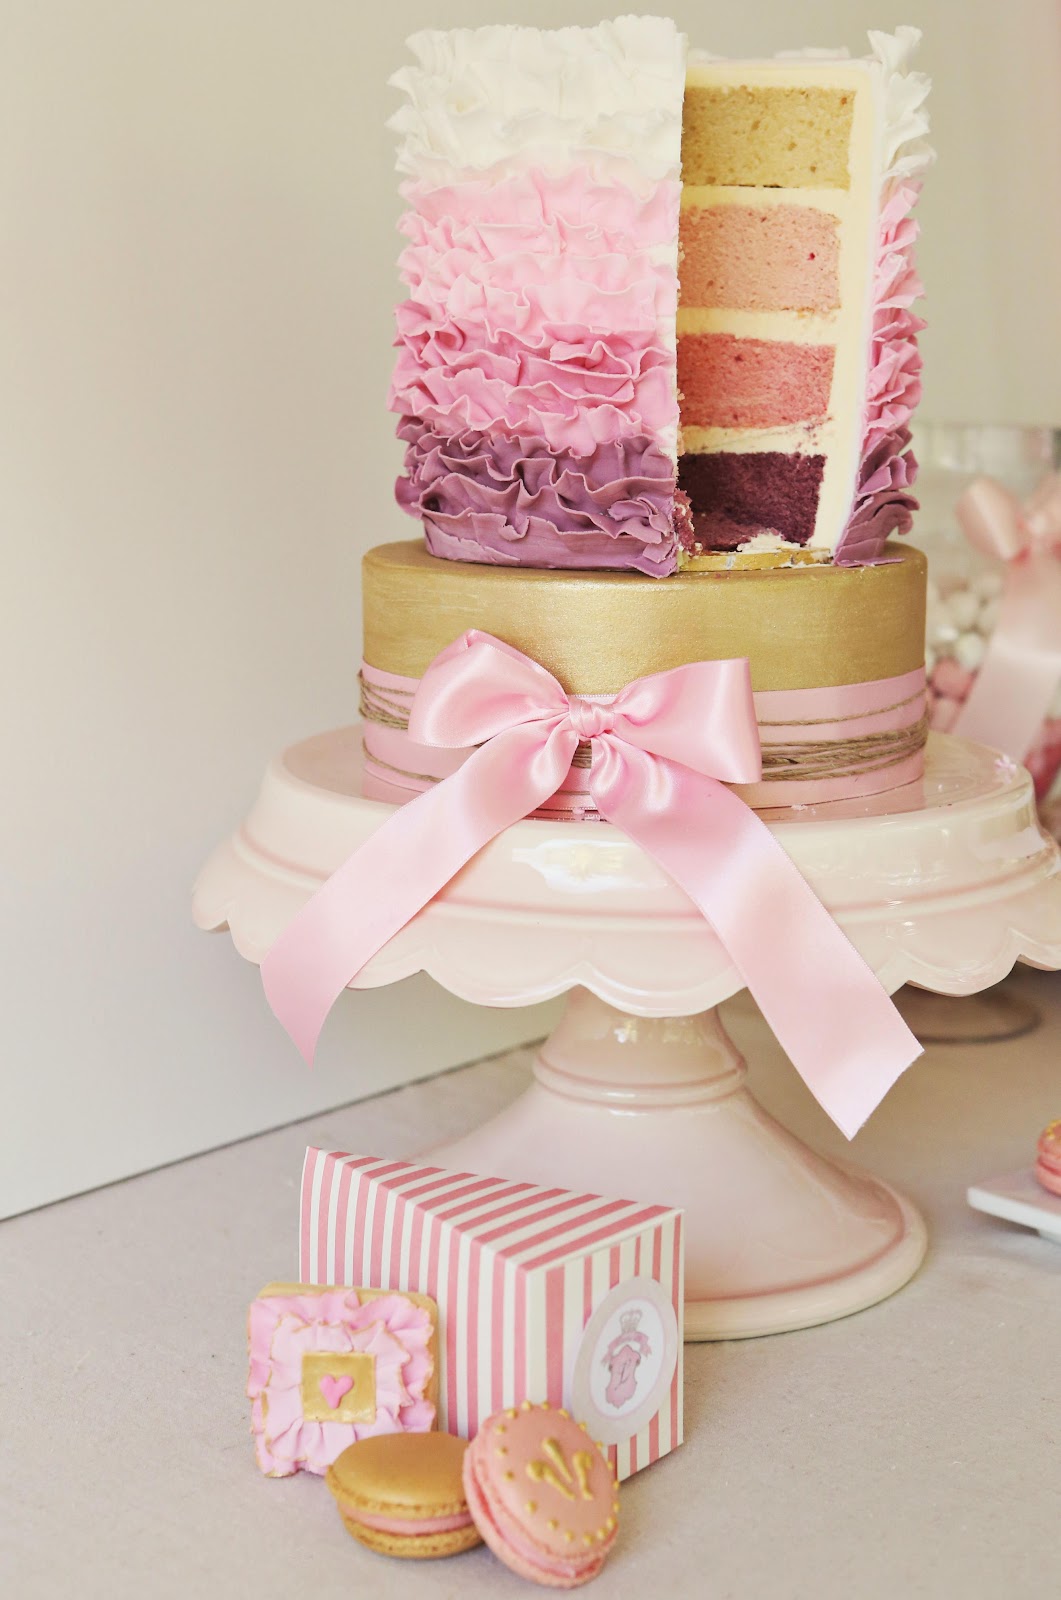 cake pops decorating ideas cake+boxes+robert+gordon+princess+tiara+cake+pink+ombre+sliced+photo 